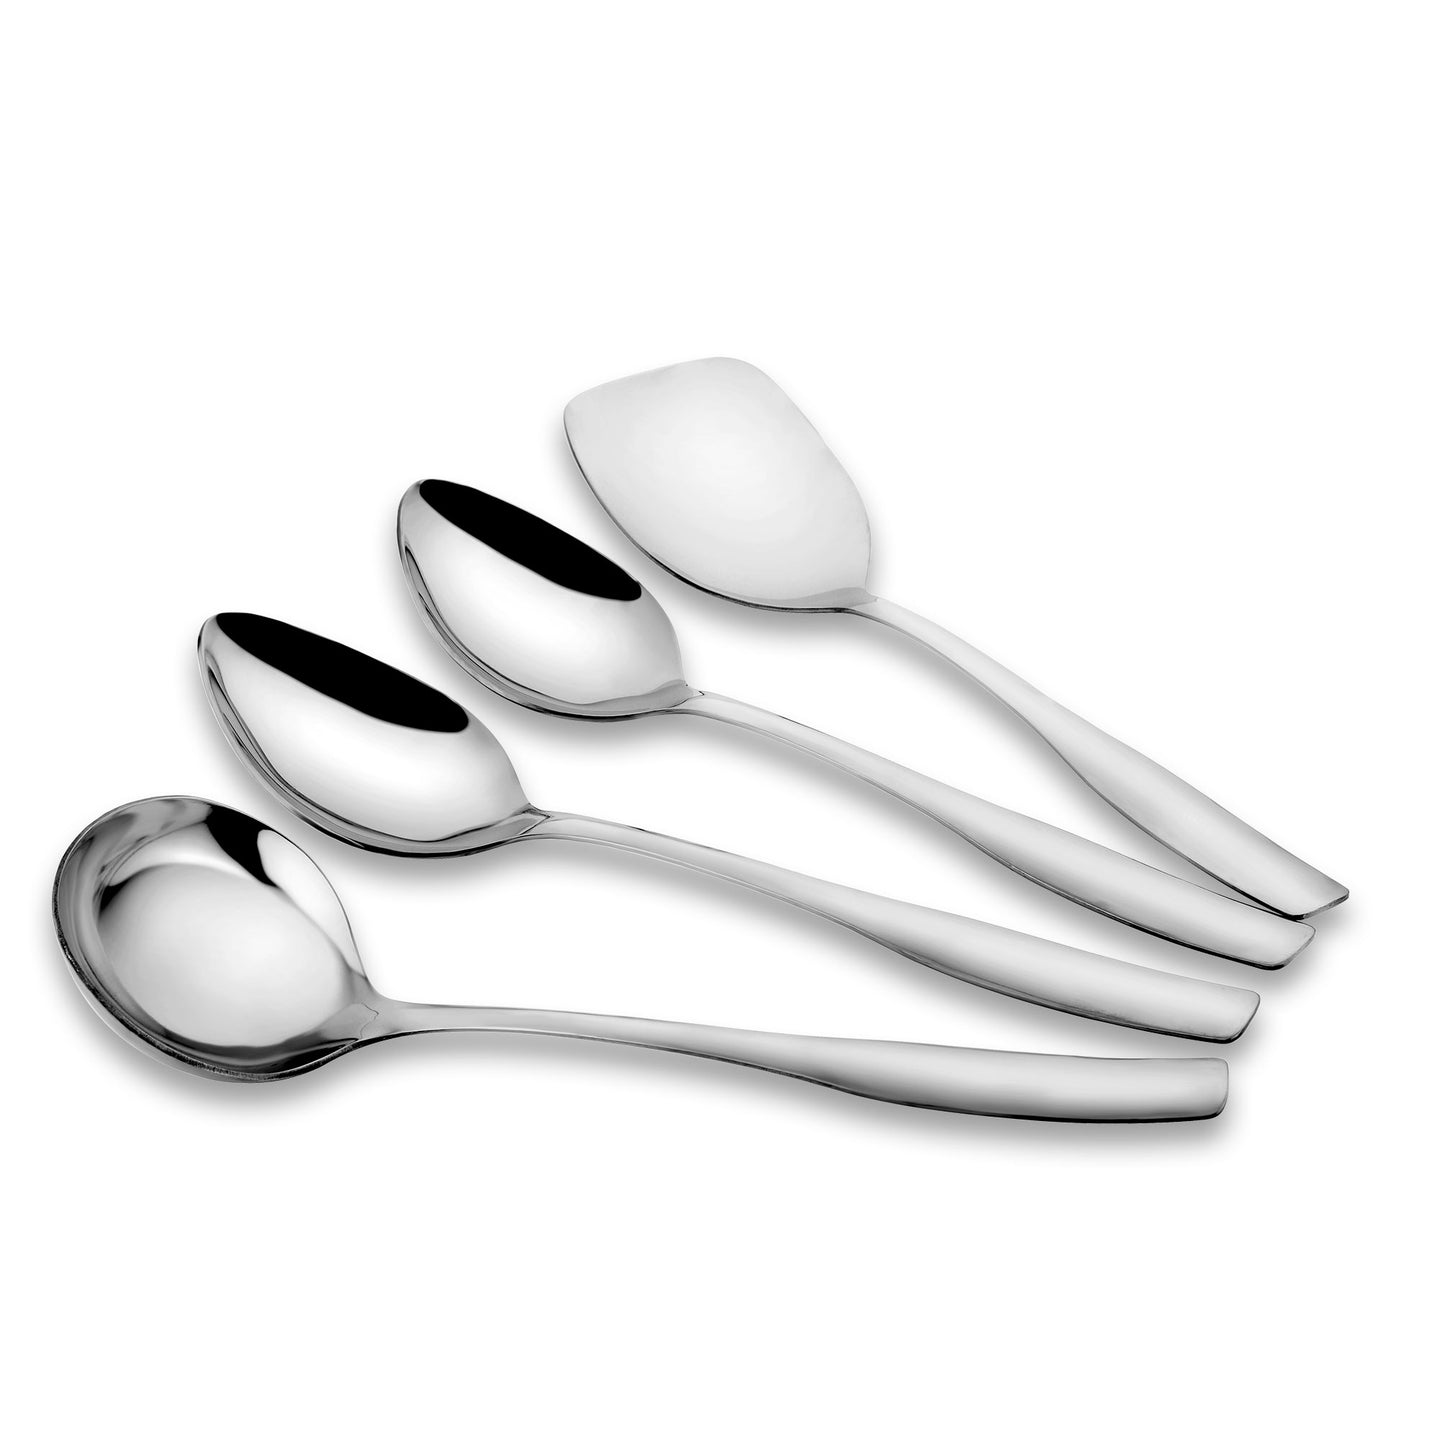 "Safari" Stainless Steel Serving Spoon(Set of 4 pcs)